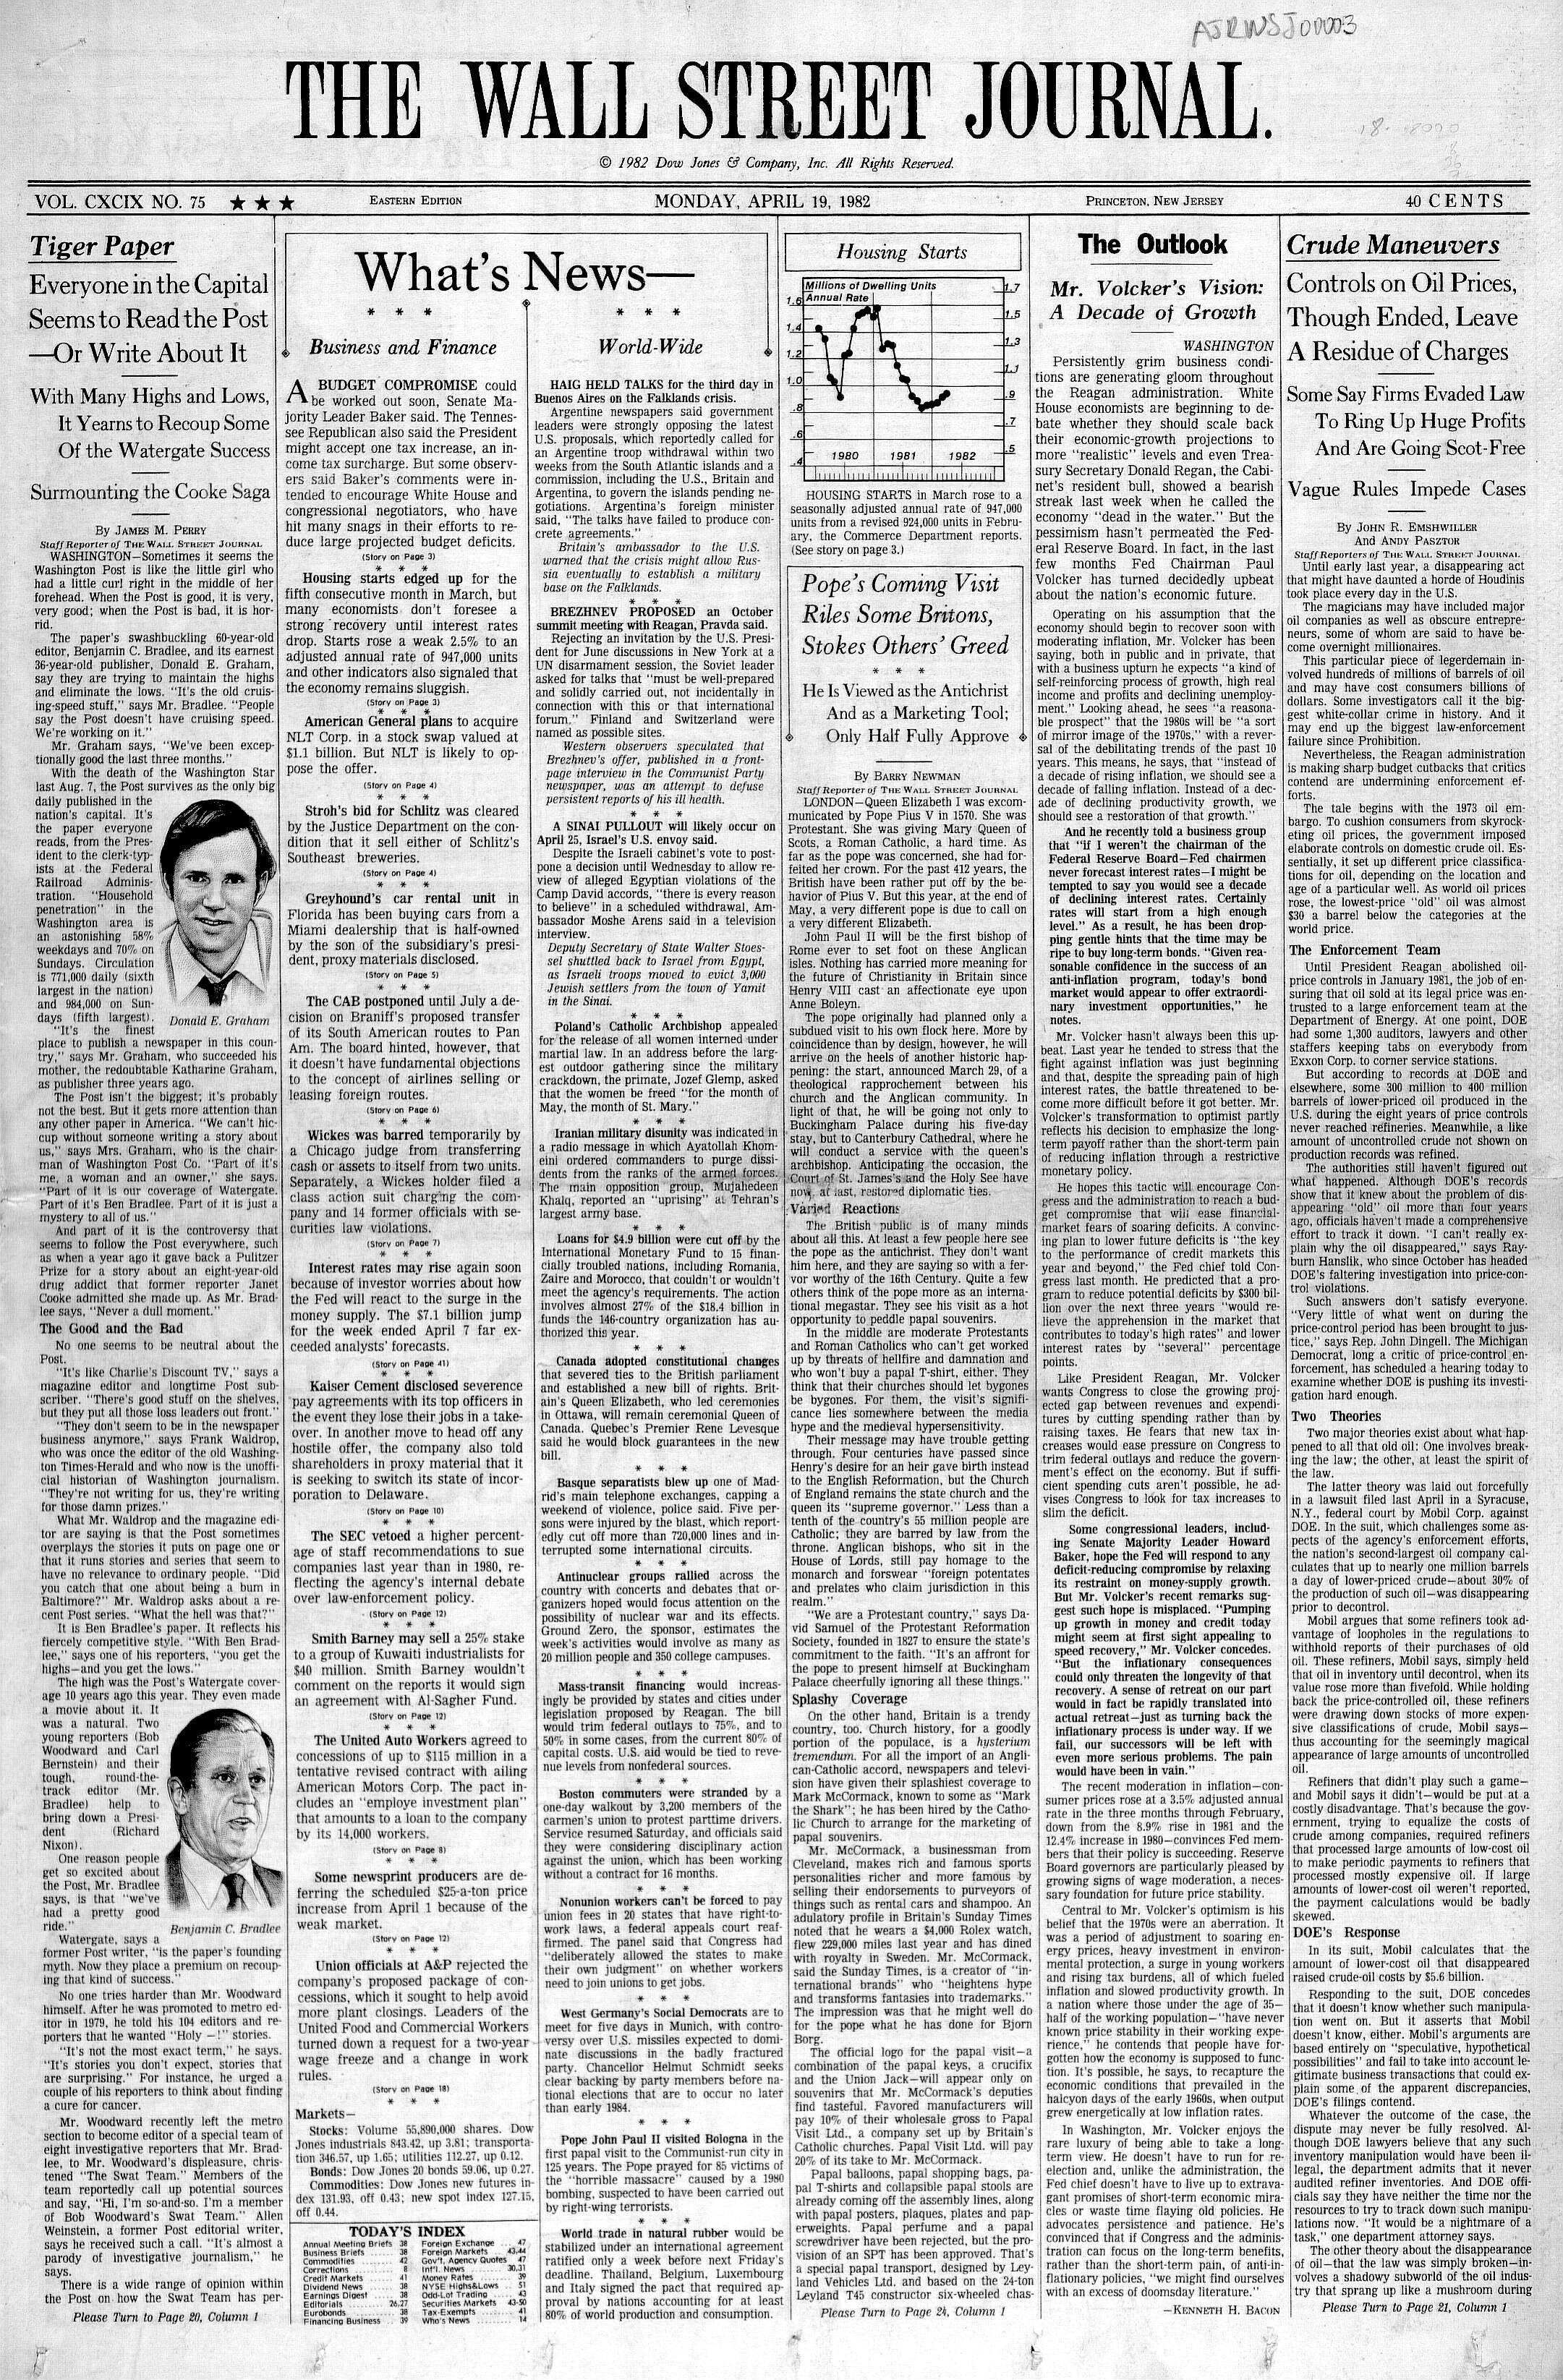 The Wall Street Journal Nov. 9, 1978 Vintage Newspaper Paper Wyoming  Wrangle